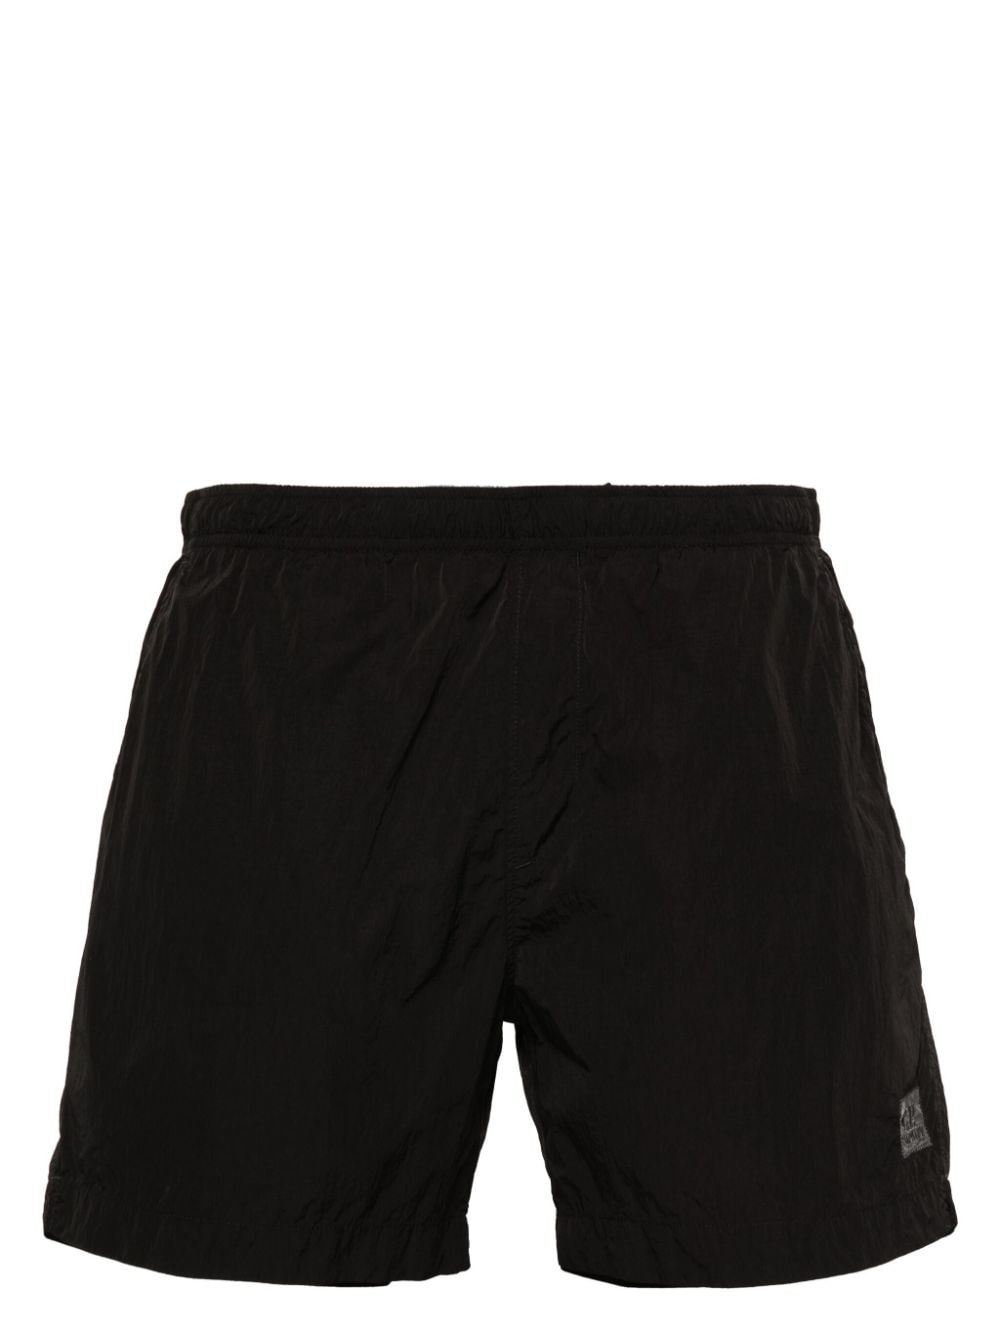 C.P. Company Eco-Chrome R swim shorts - Black von C.P. Company